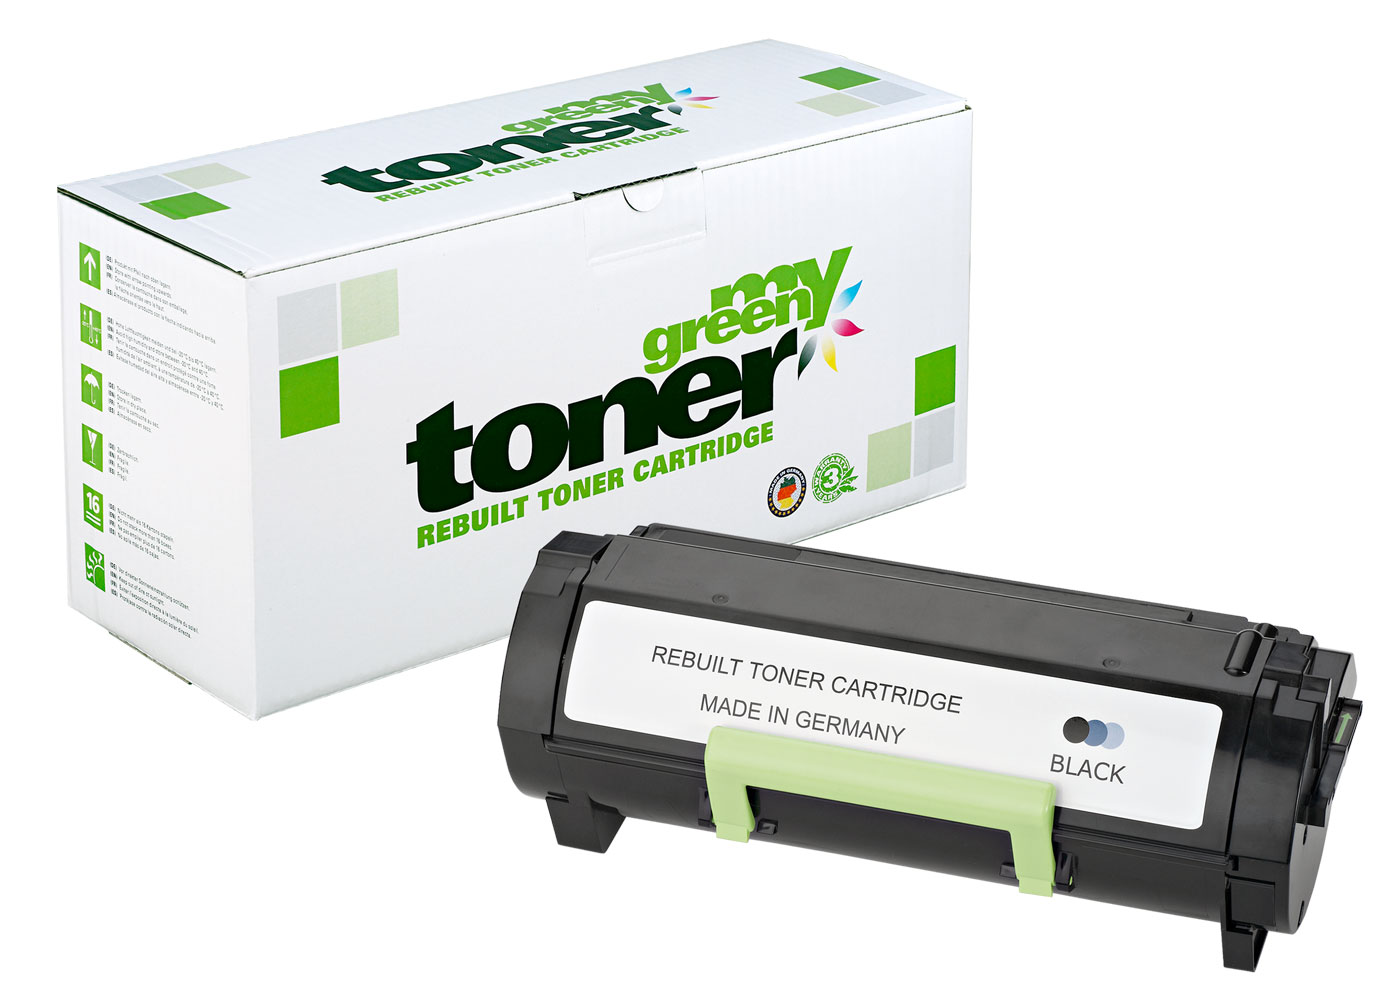 Rebuilt Toner Cartridge for Lexmark MS421/521, MX421/521 a. o.